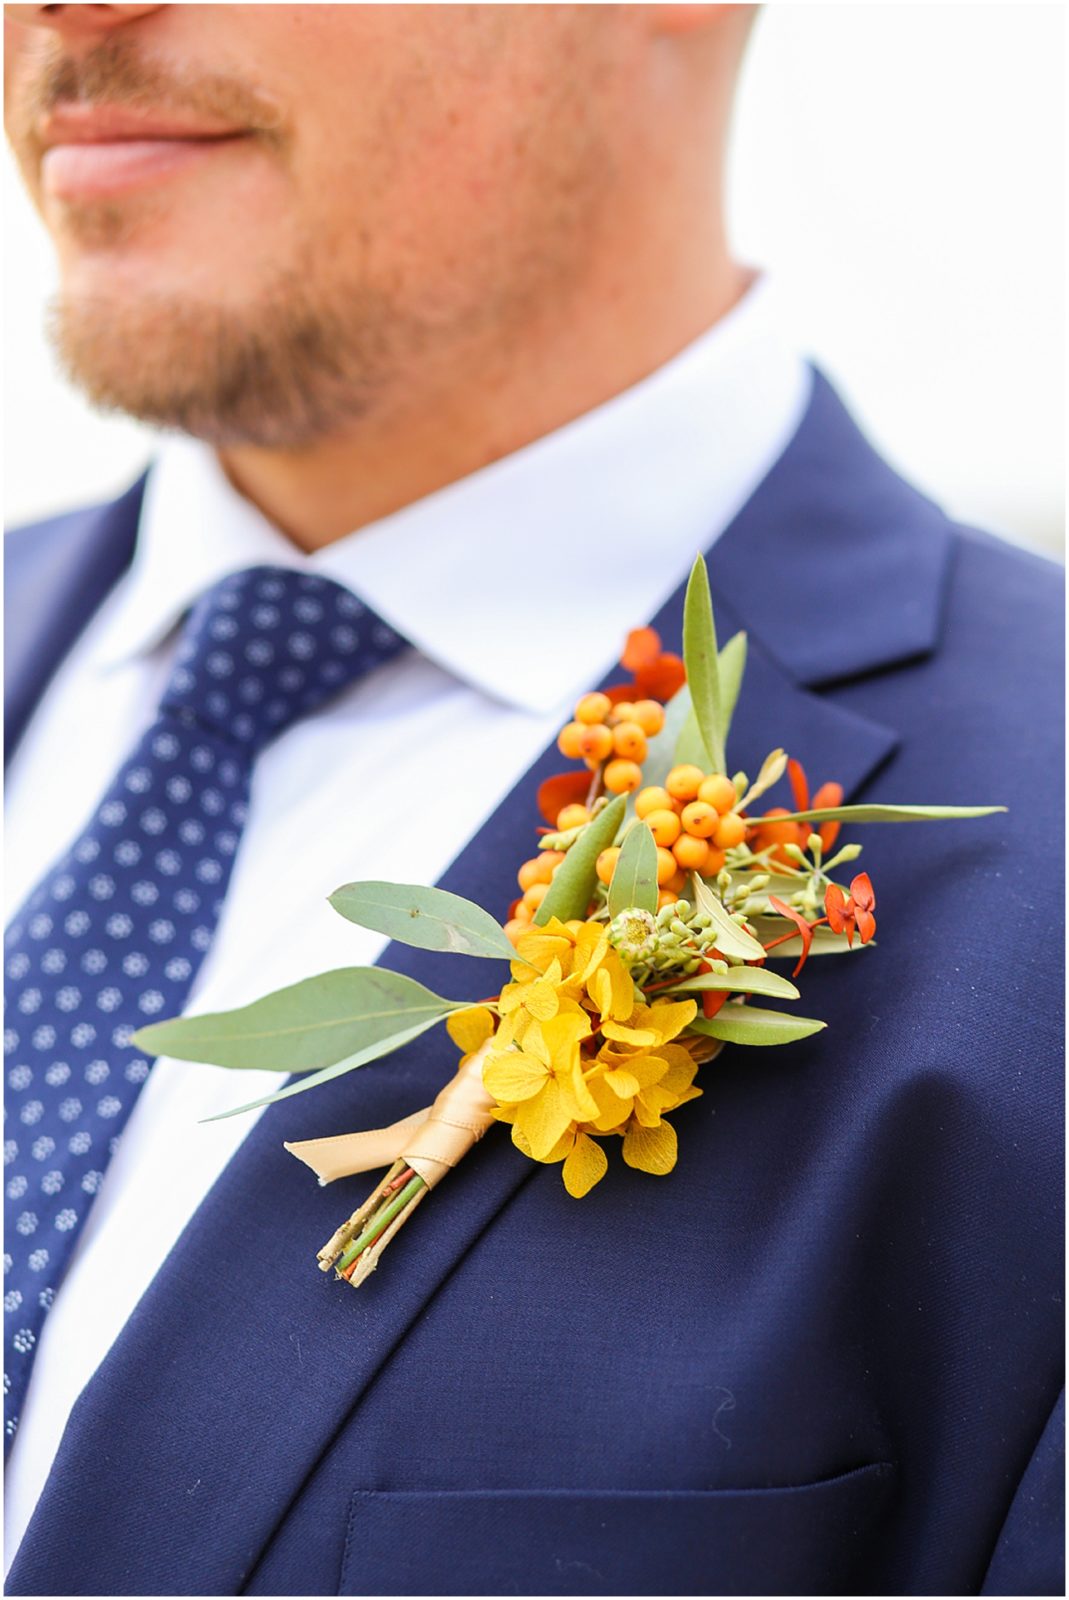  GROOM FLOWERS - WEDDING DECOR - WHITE CARPET BRIDE - BRIDAL MAKEUP - BRIDAL HAIR - PRETTY WEDDING FLOWERS - FALL THEME WEDDING DECOR - MARIAM SAIFAN PHOTOGRAPHY